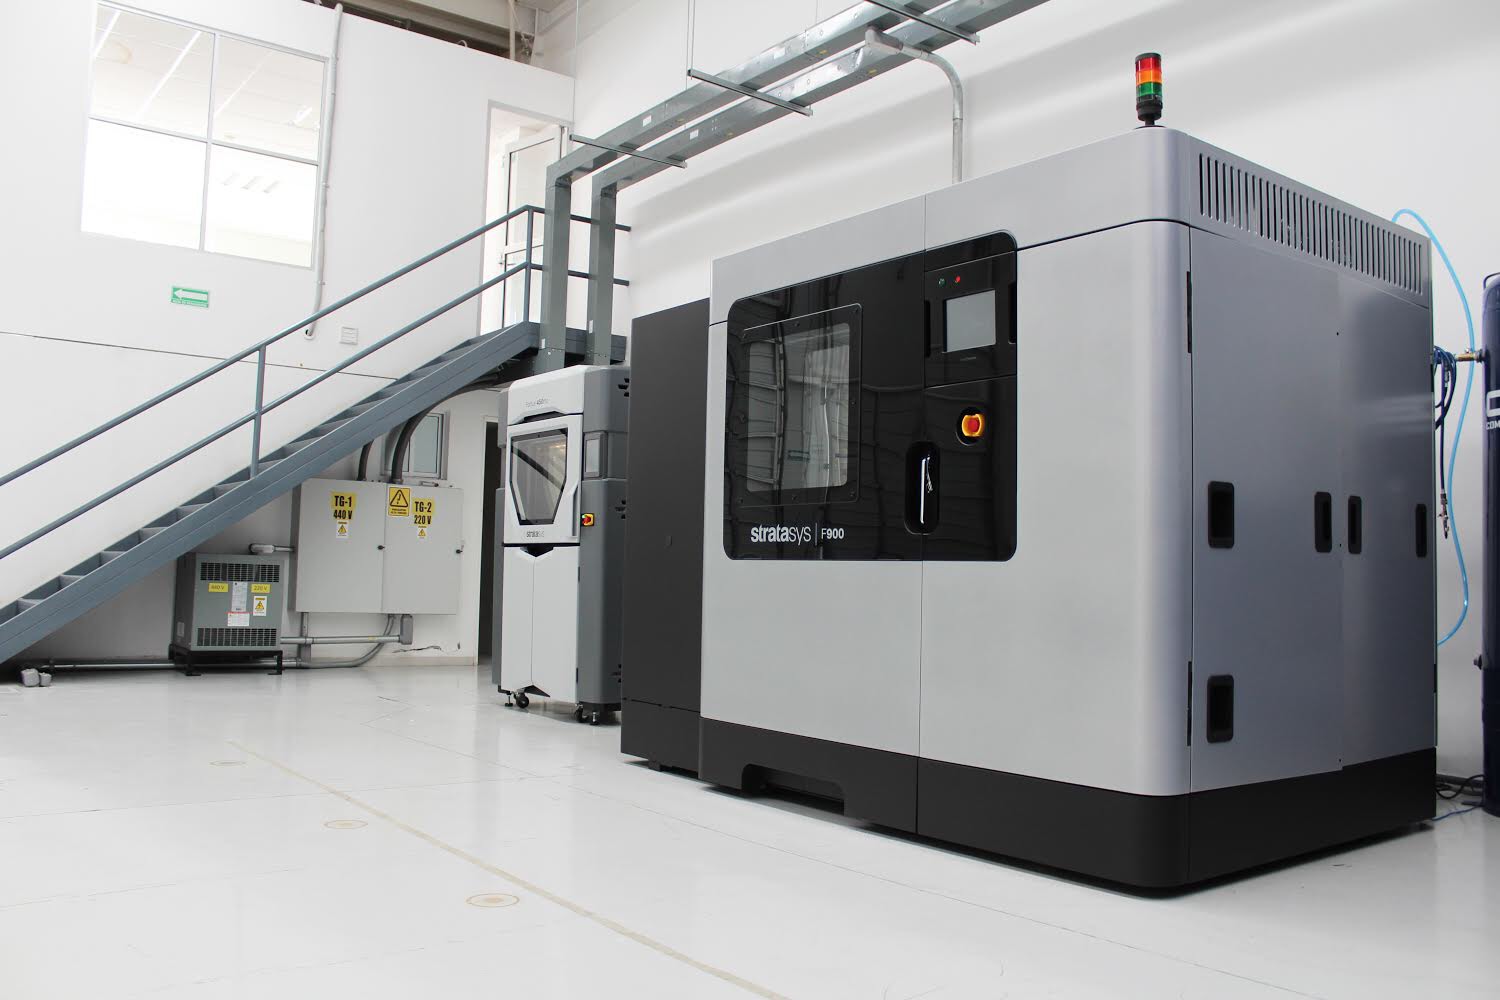  Empresa queretana de impresión 3D consolida alianza y se posiciona como líder nacional